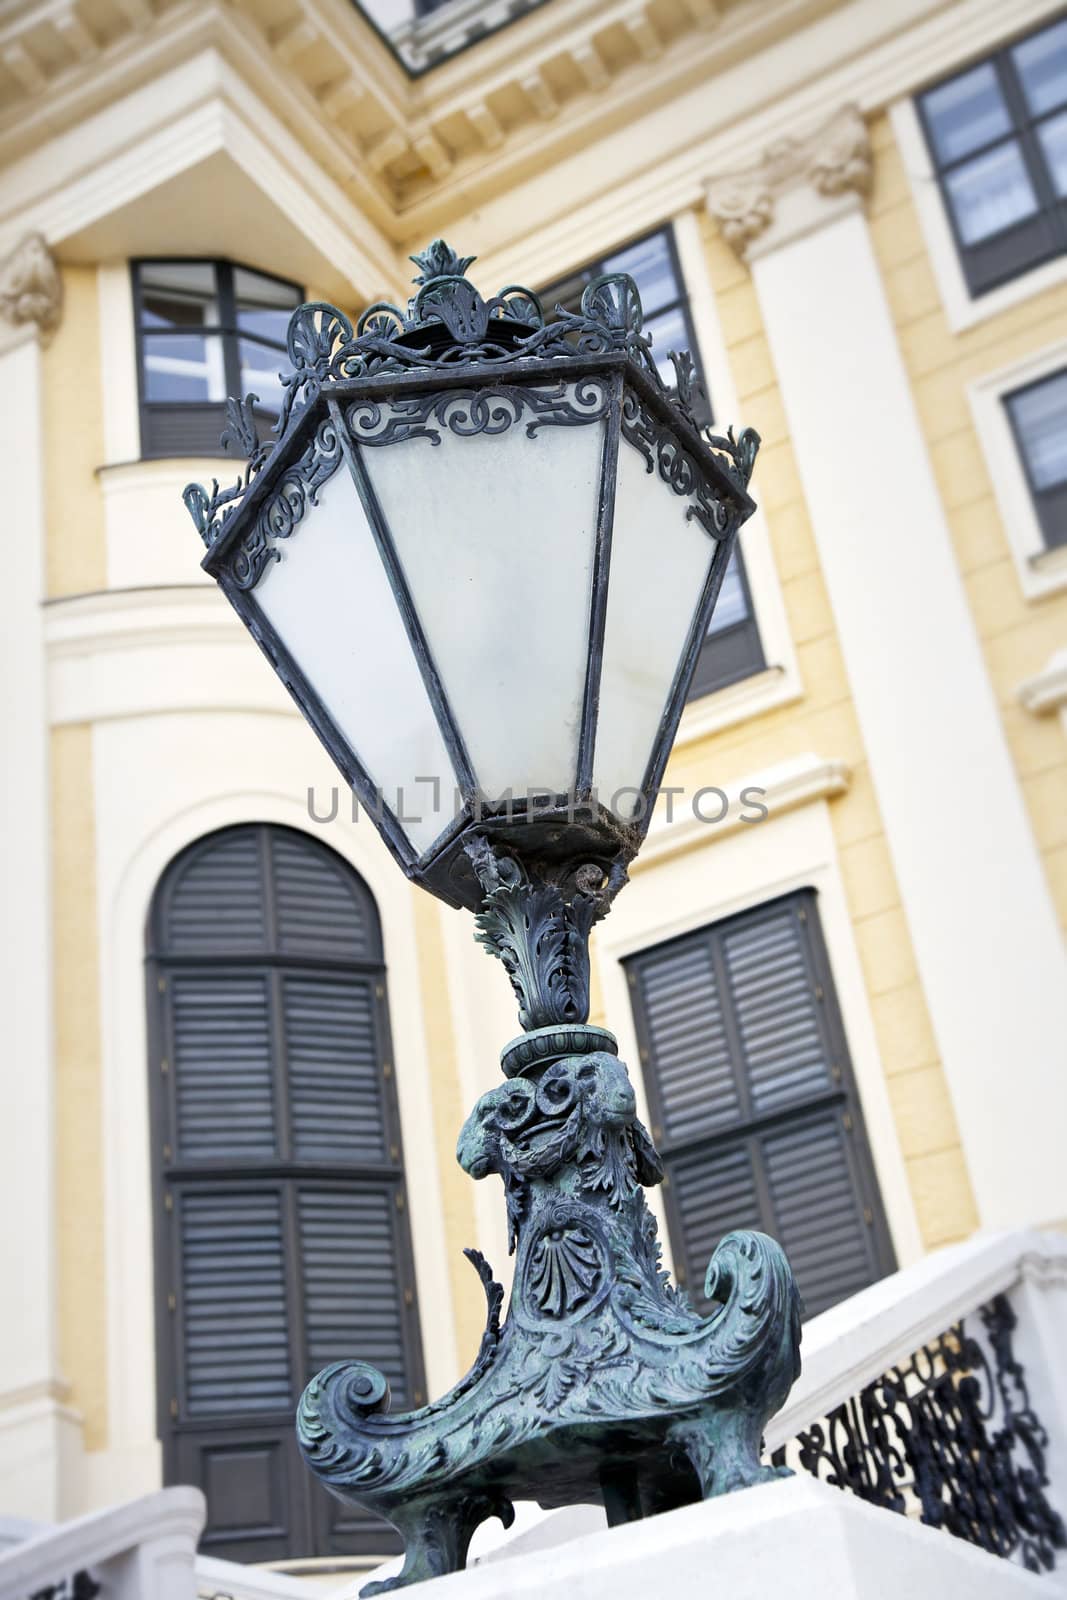 Decorative Outdoor Lamp.   by charlotteLake